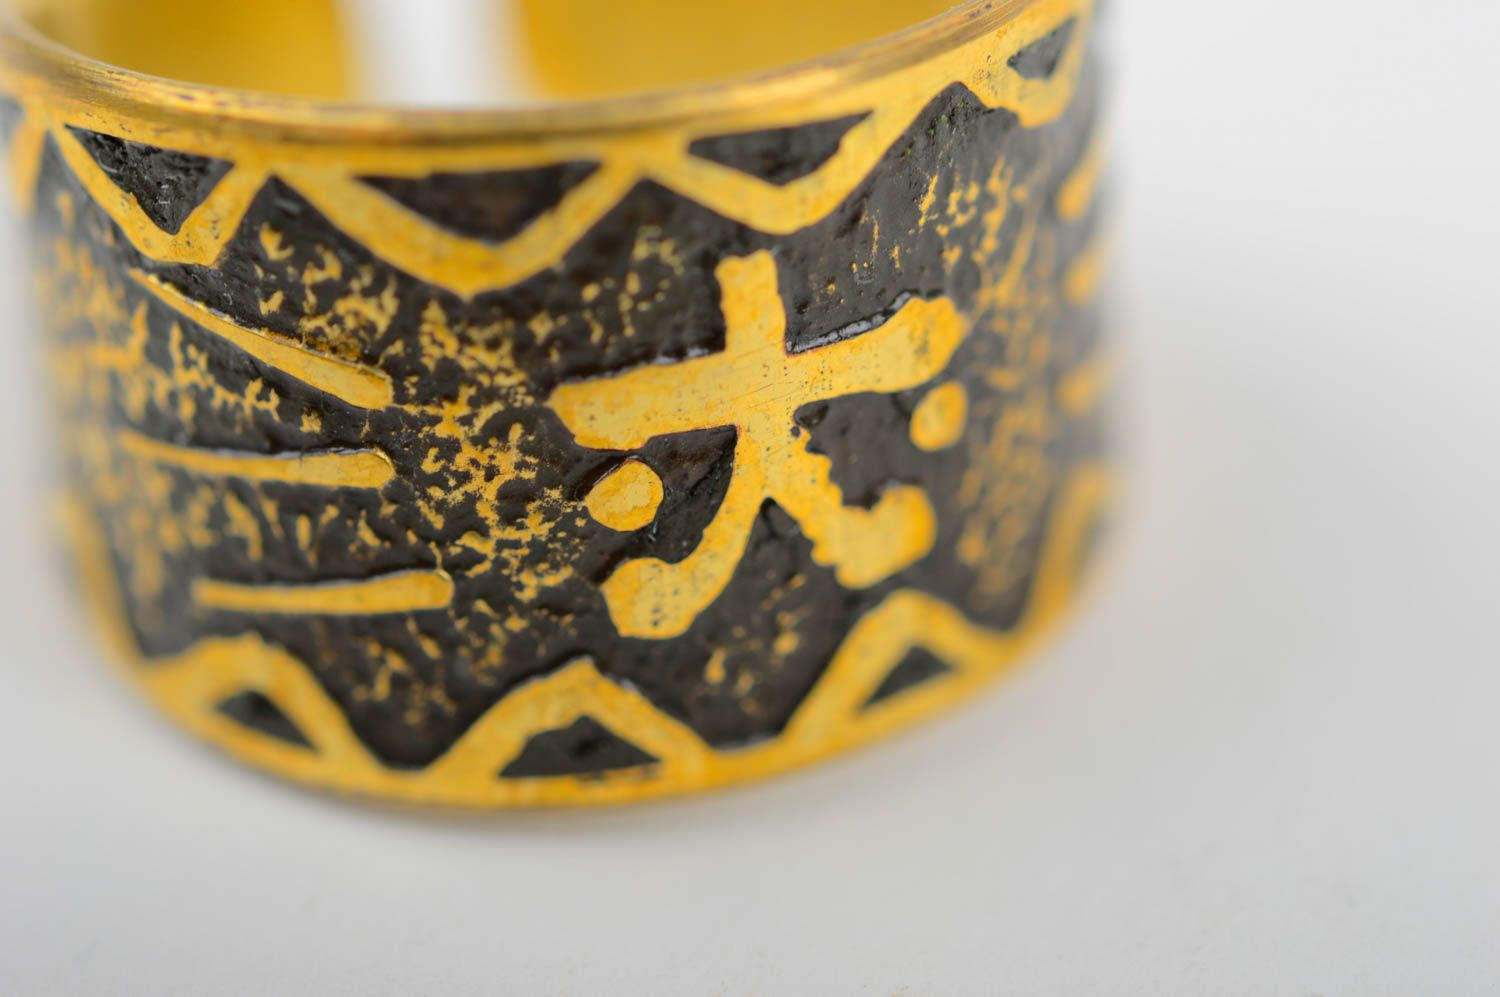 Messing Ring Handmade Schmuck Ring für Damen Mode Accessoire stilvoll originell foto 5